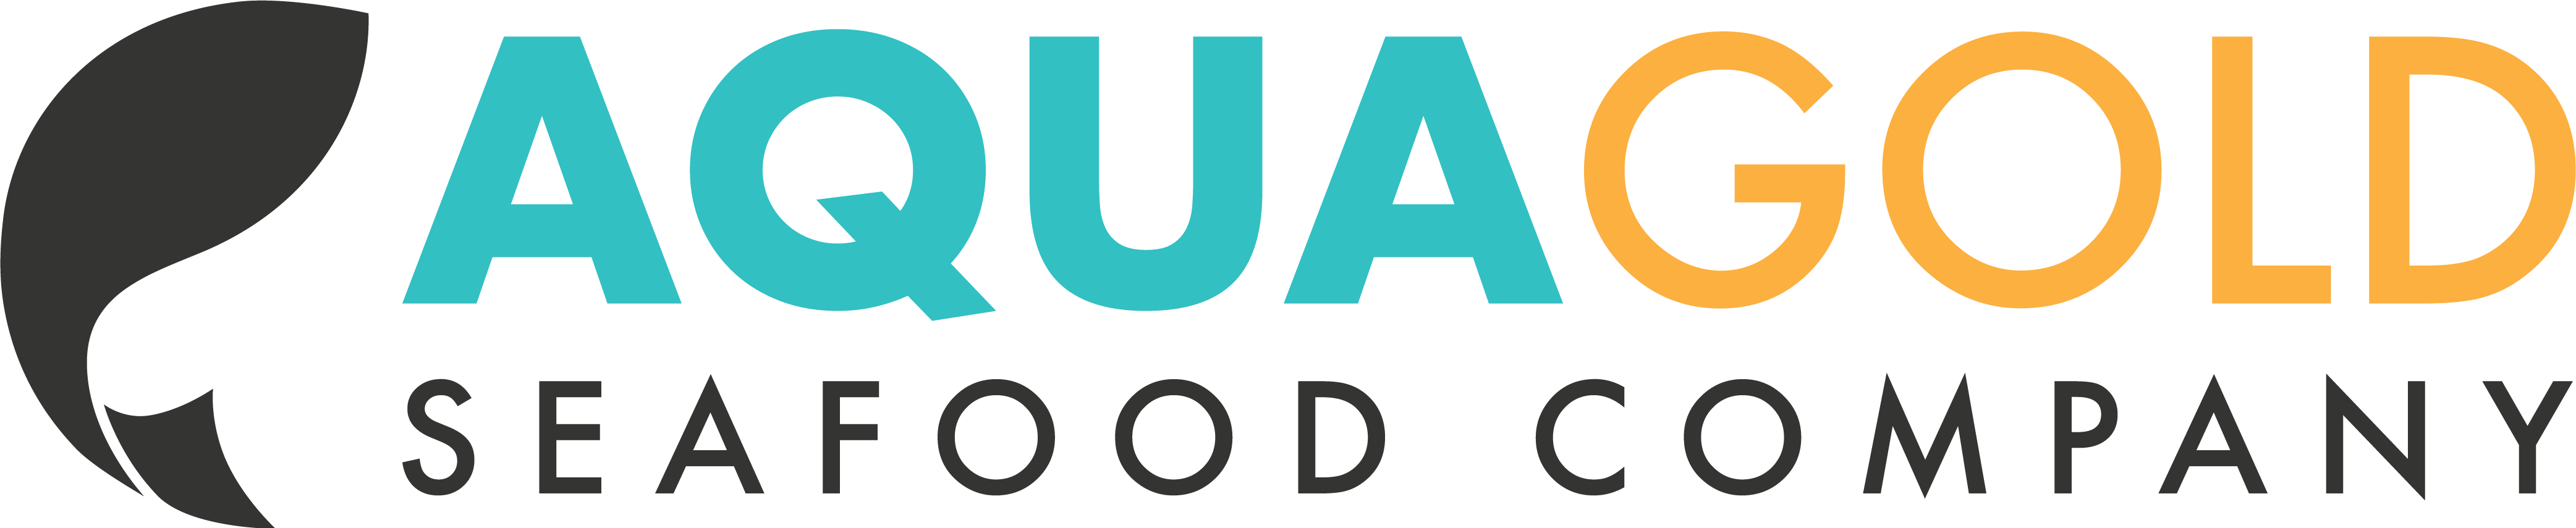 Aquagold Seafood